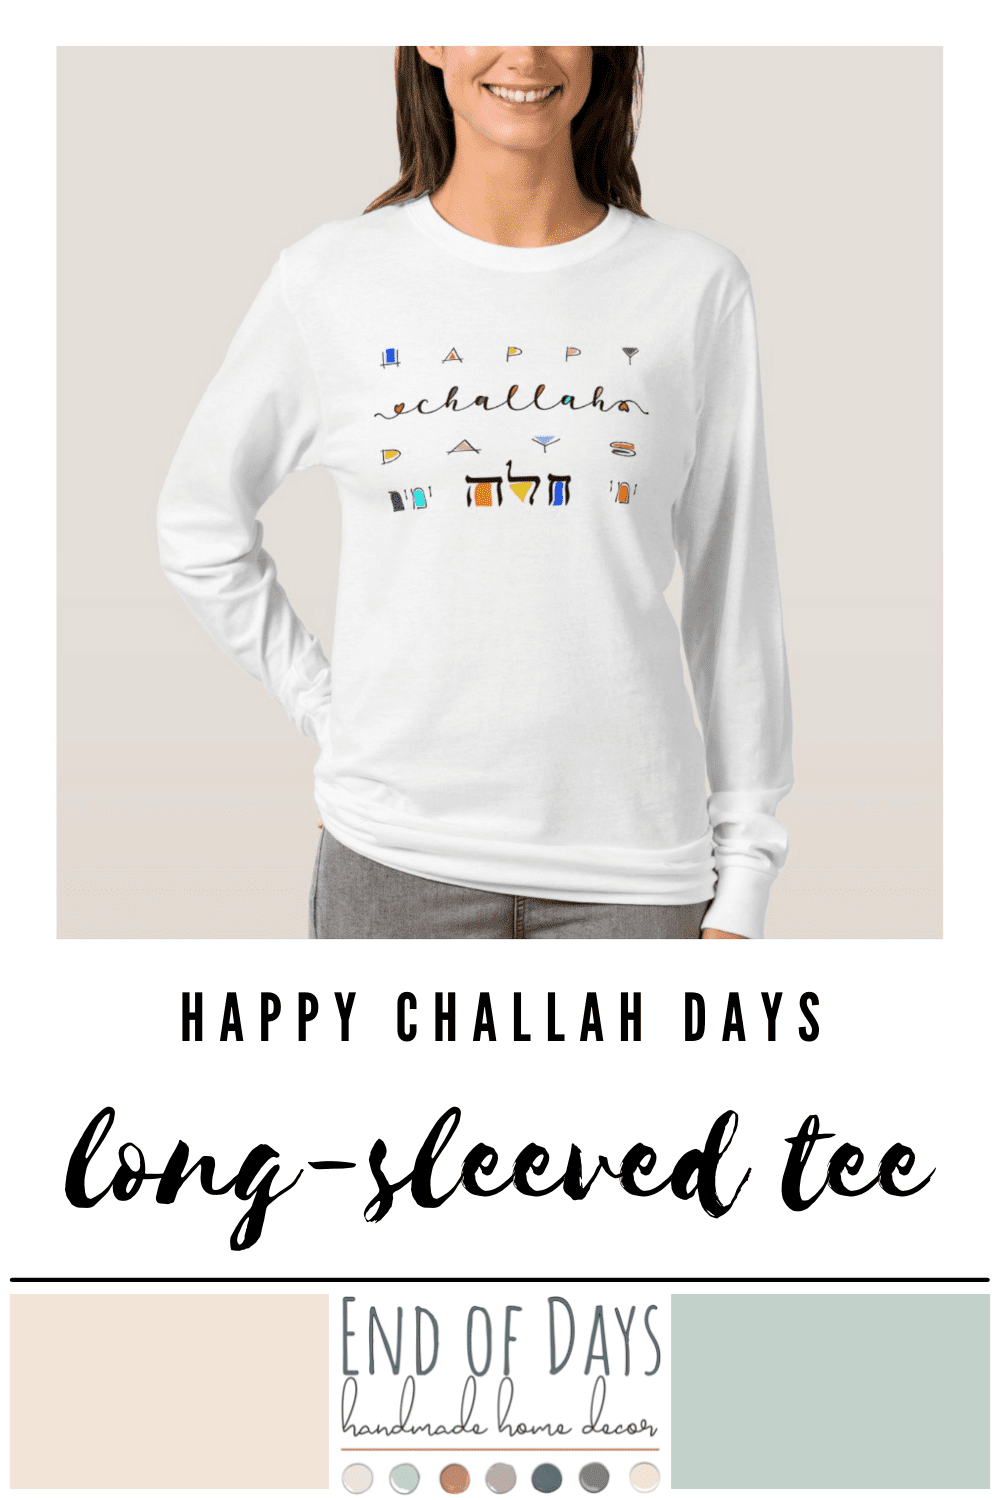 Jewish Holidays Gift Shabbat Tee Happy Hanukkah Unisex T-Shirt XS-4XL Happy Challah Days Tshirt Challah Bread Shirt